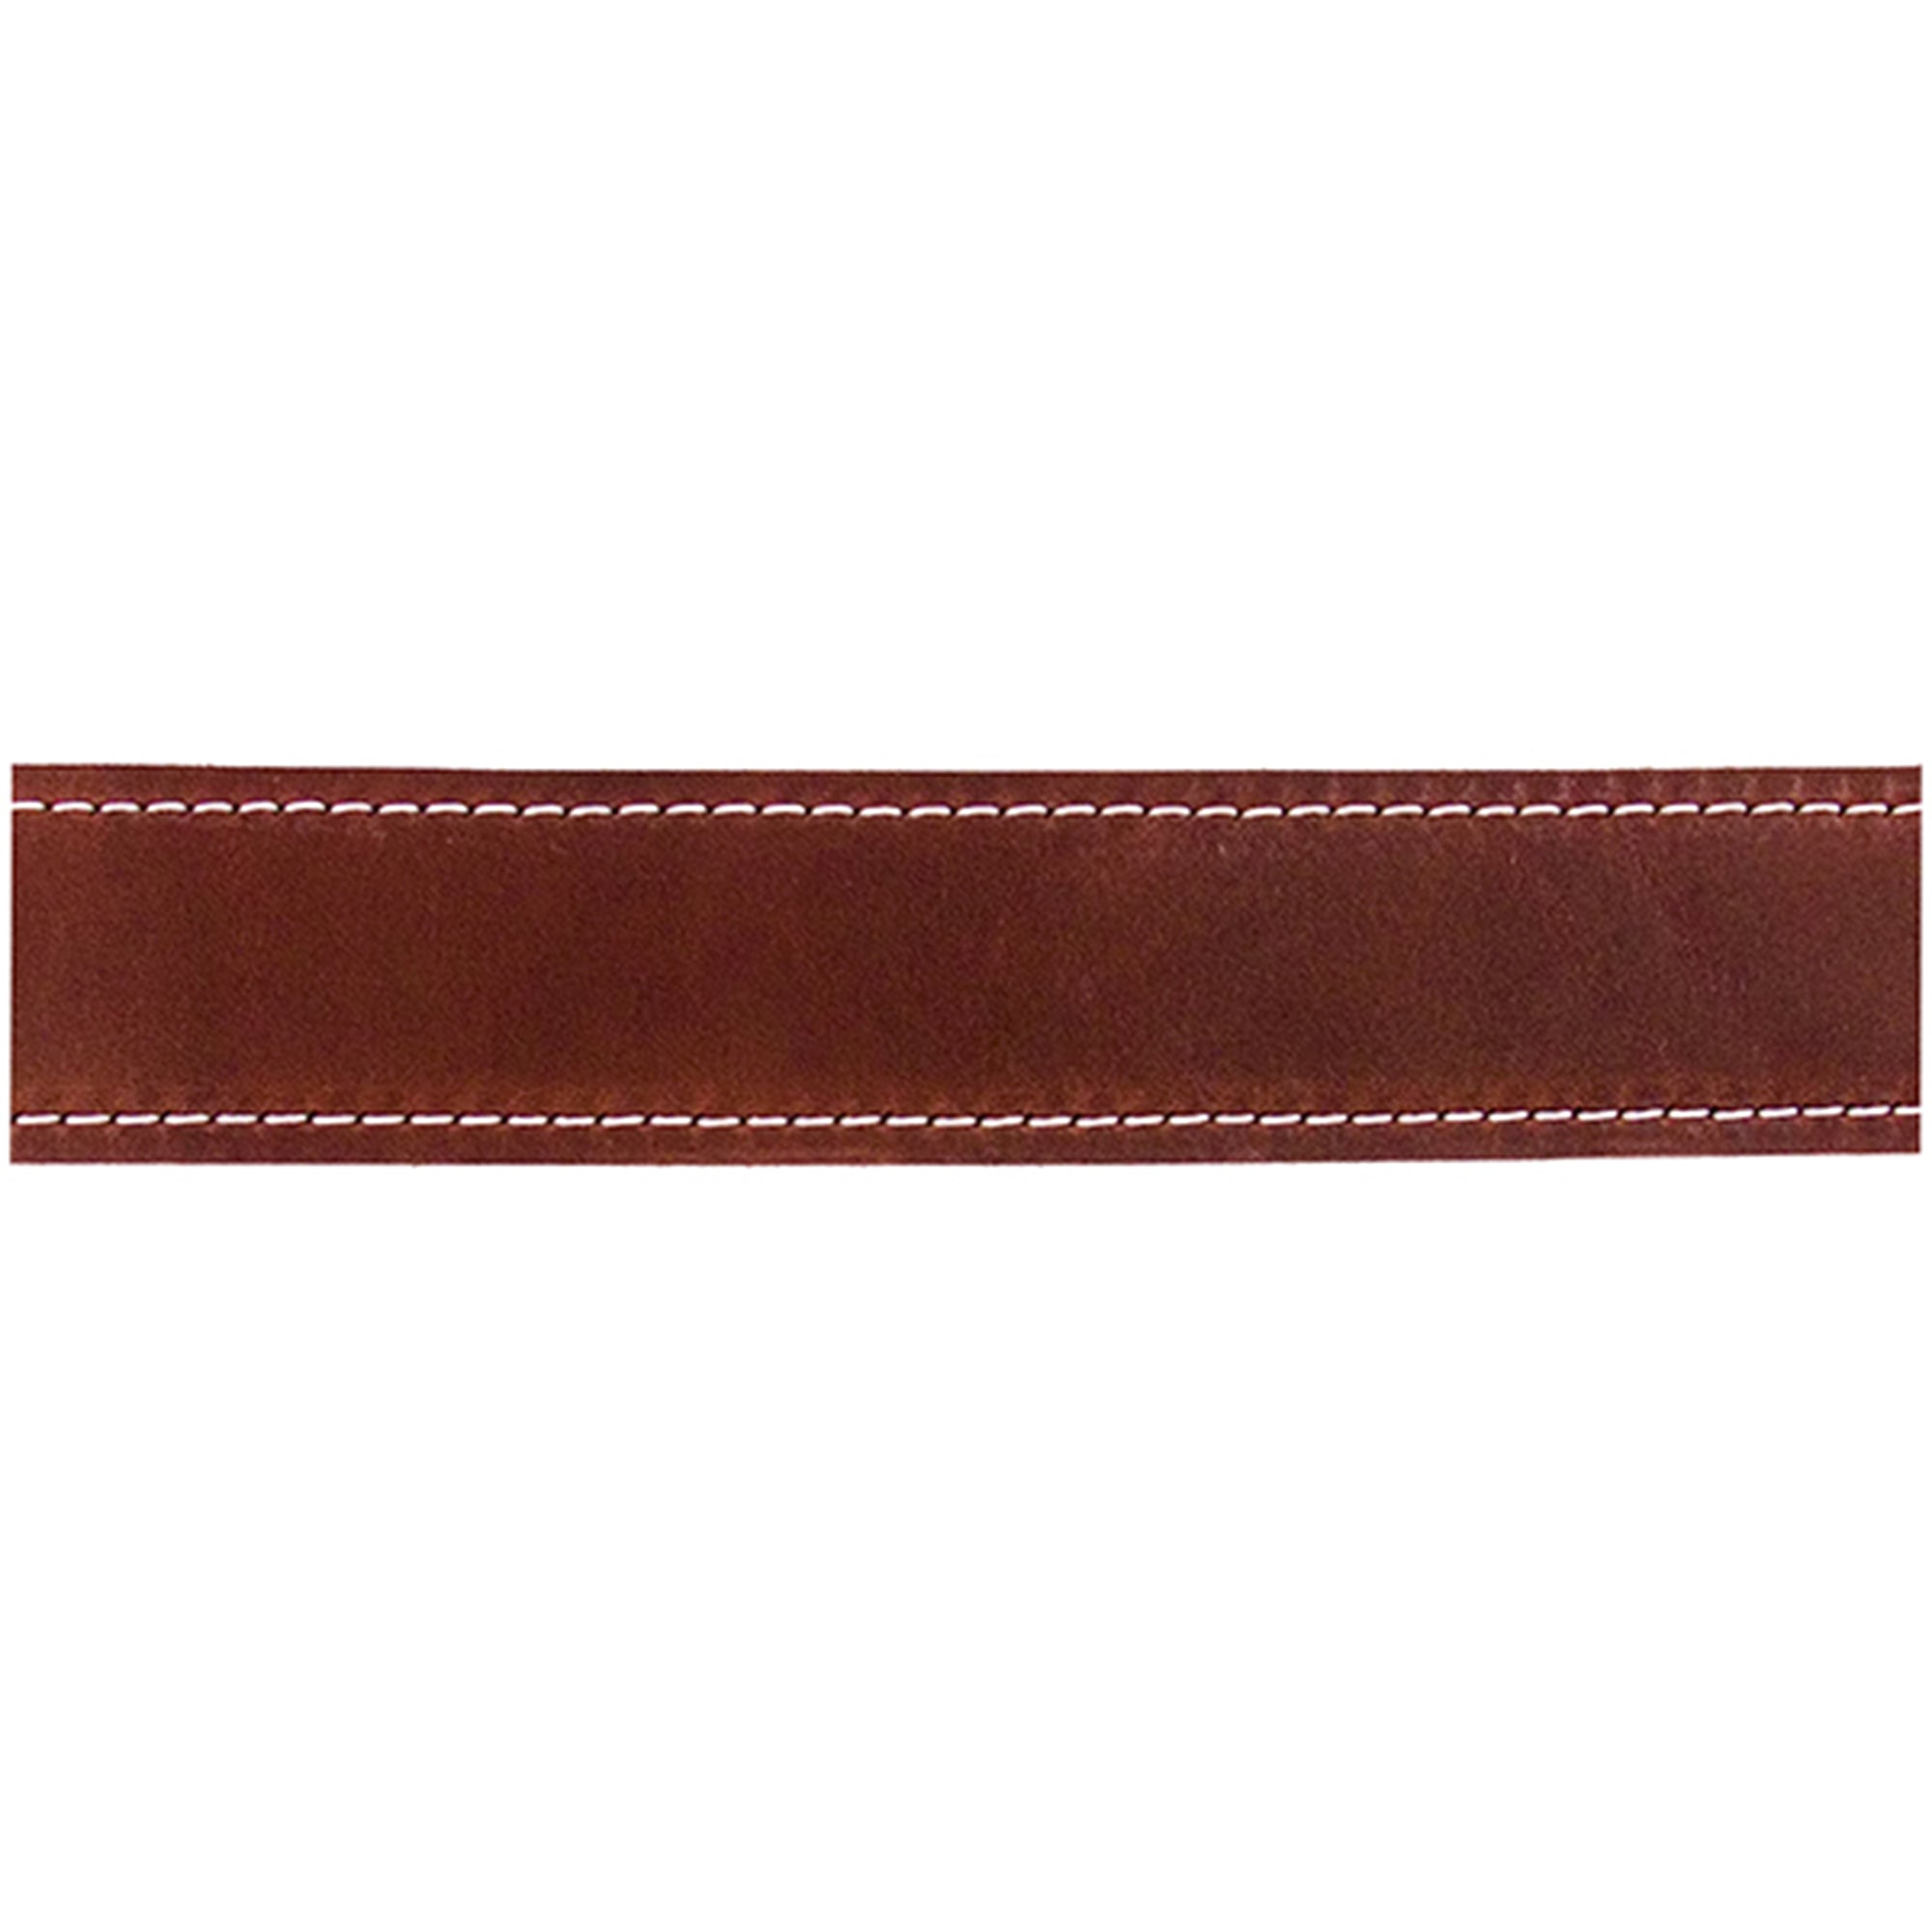 Occidental Leather 2" Leather Work Belt